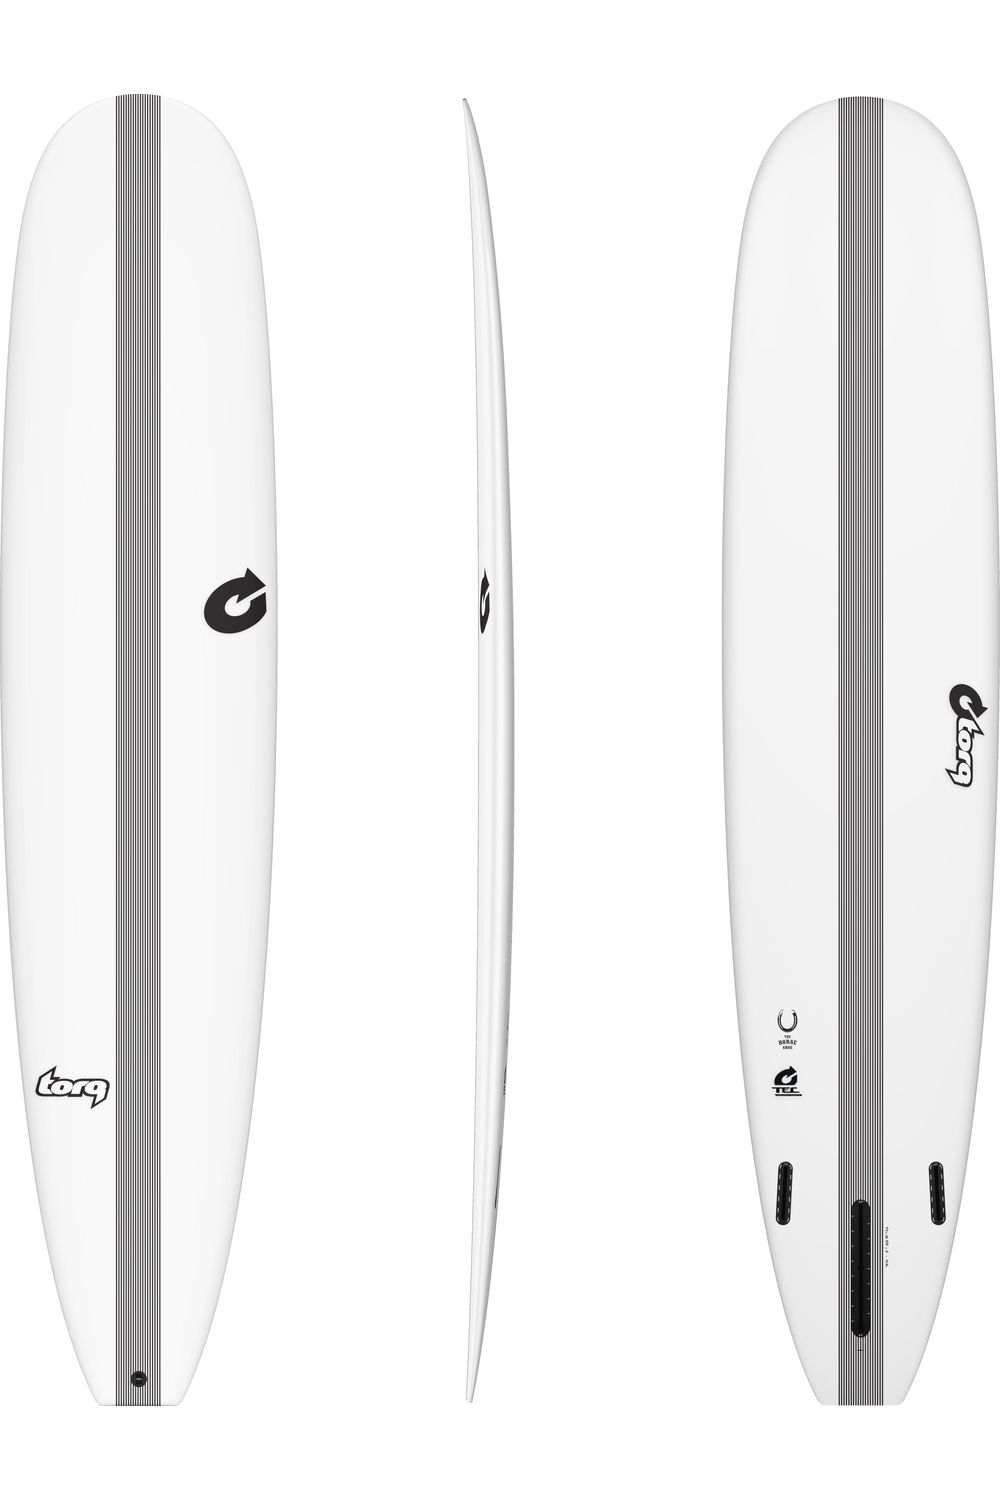 Torq TEC The Horseshoe Surfboard in White (Gen 1)